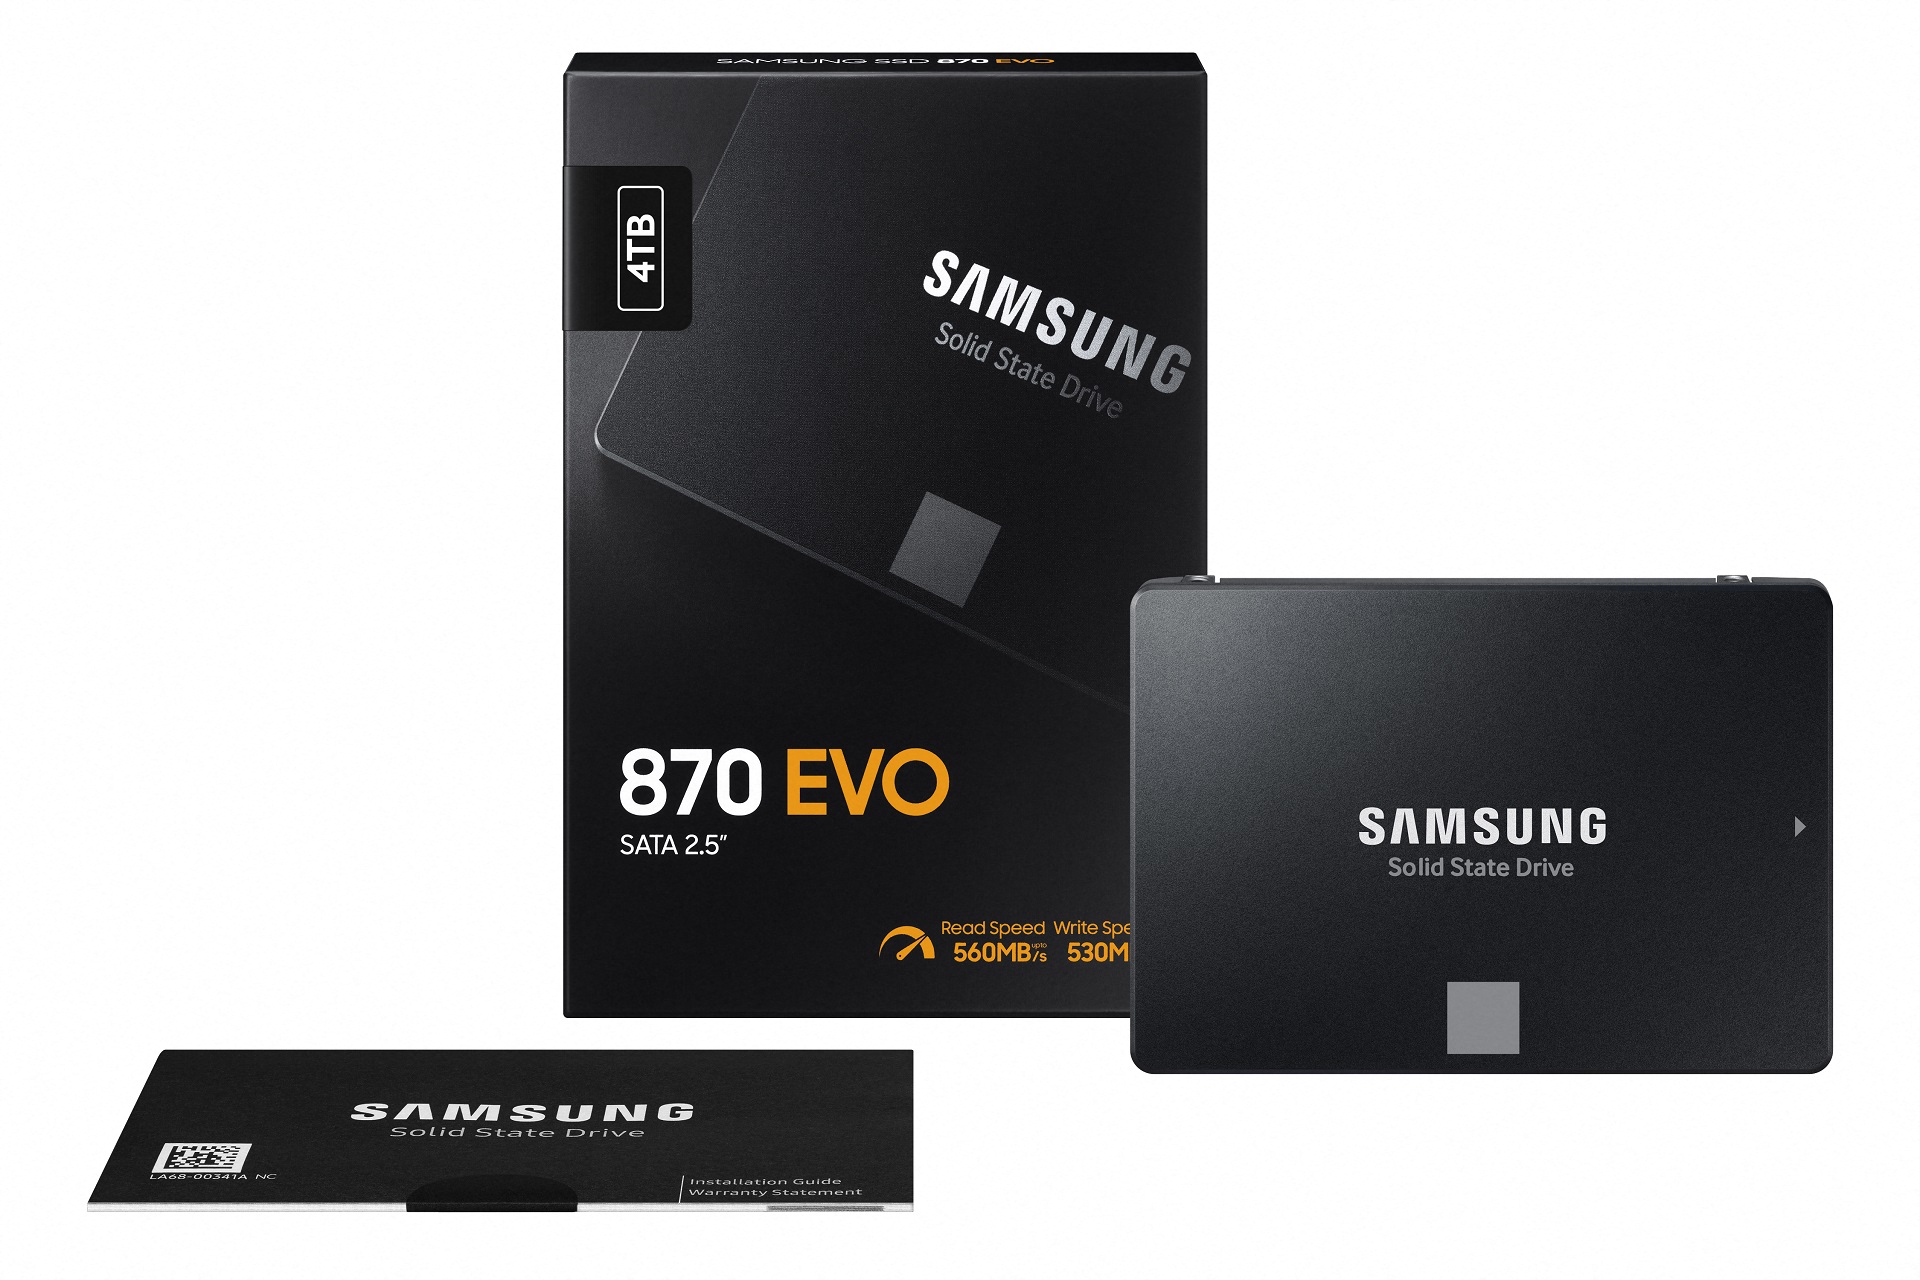 SSD 870 EVO - Packaging